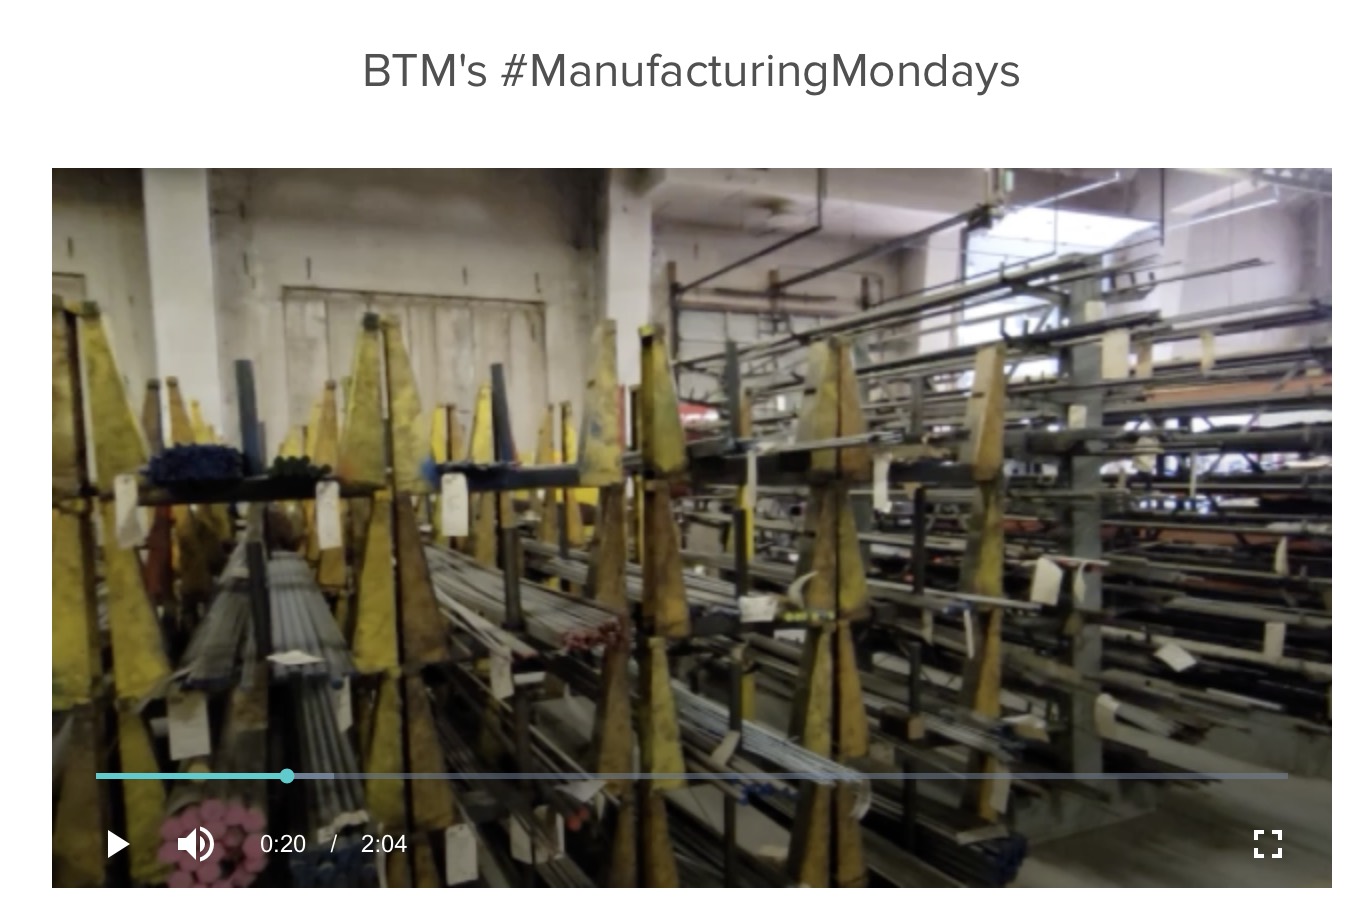 Manufacturing Mondays